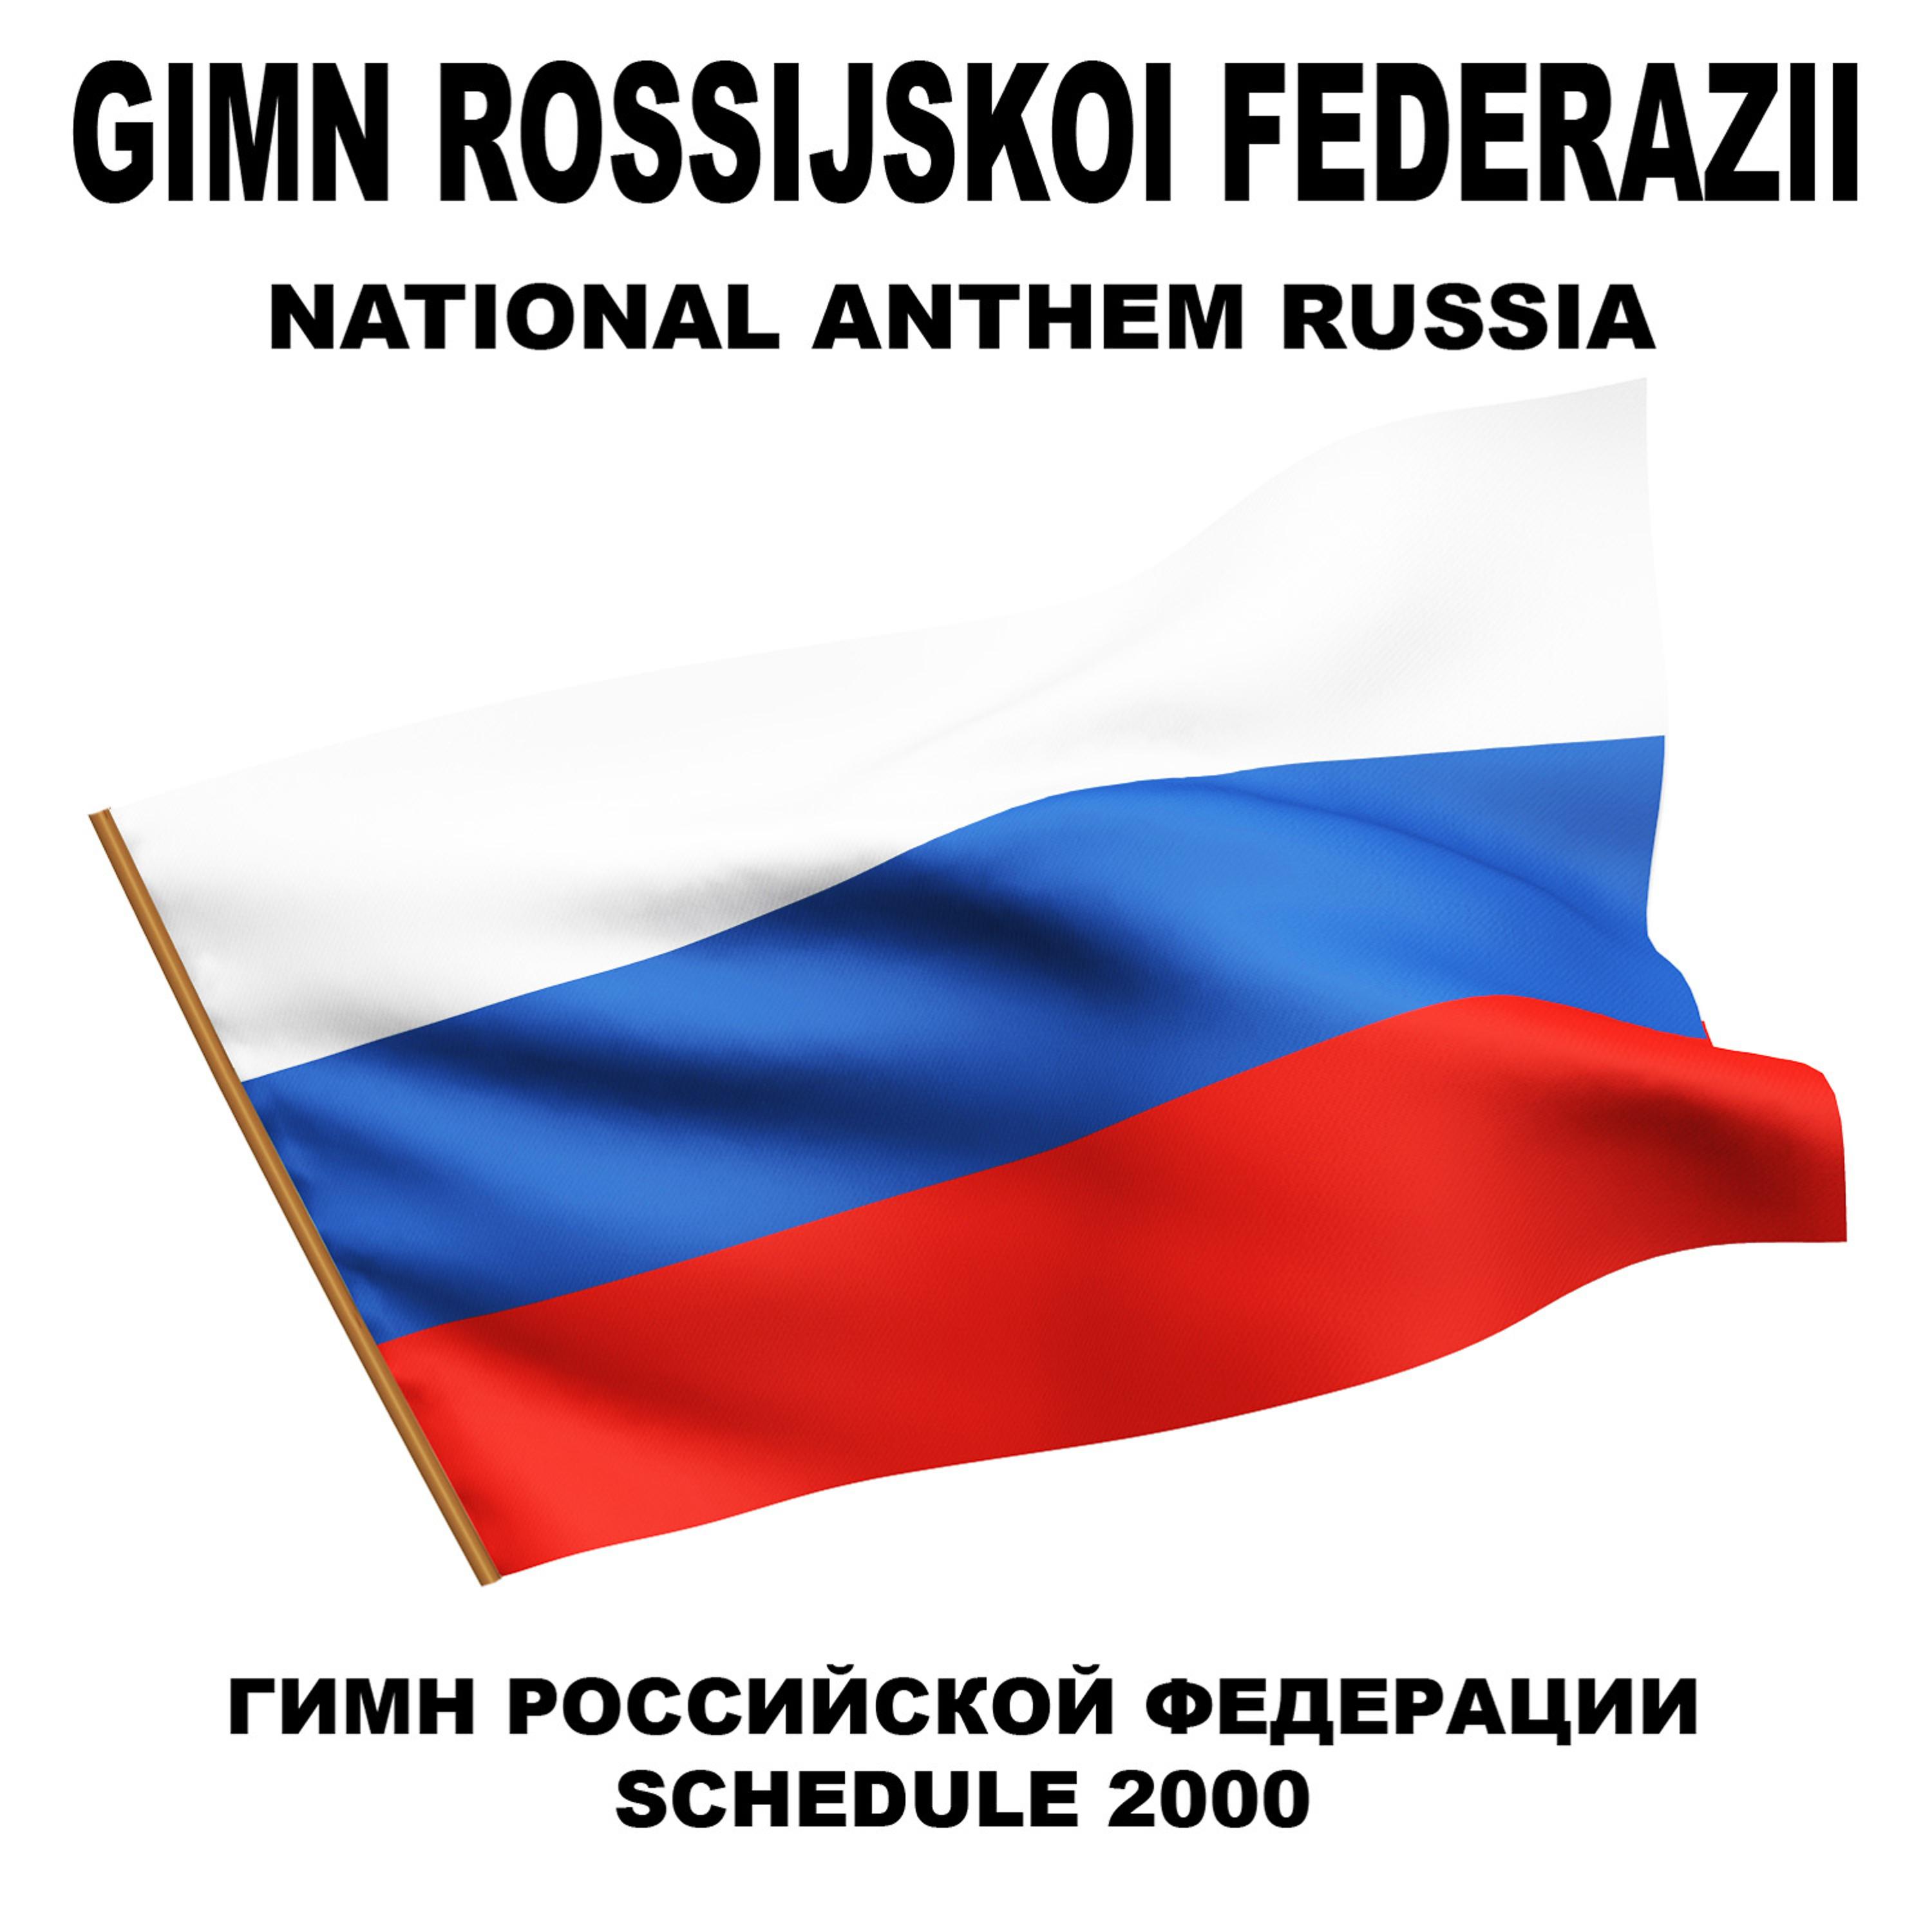 Постер альбома Гимн Российской Федерации/Gimn Rossijskoi Federazii) (National Anthem Russia)